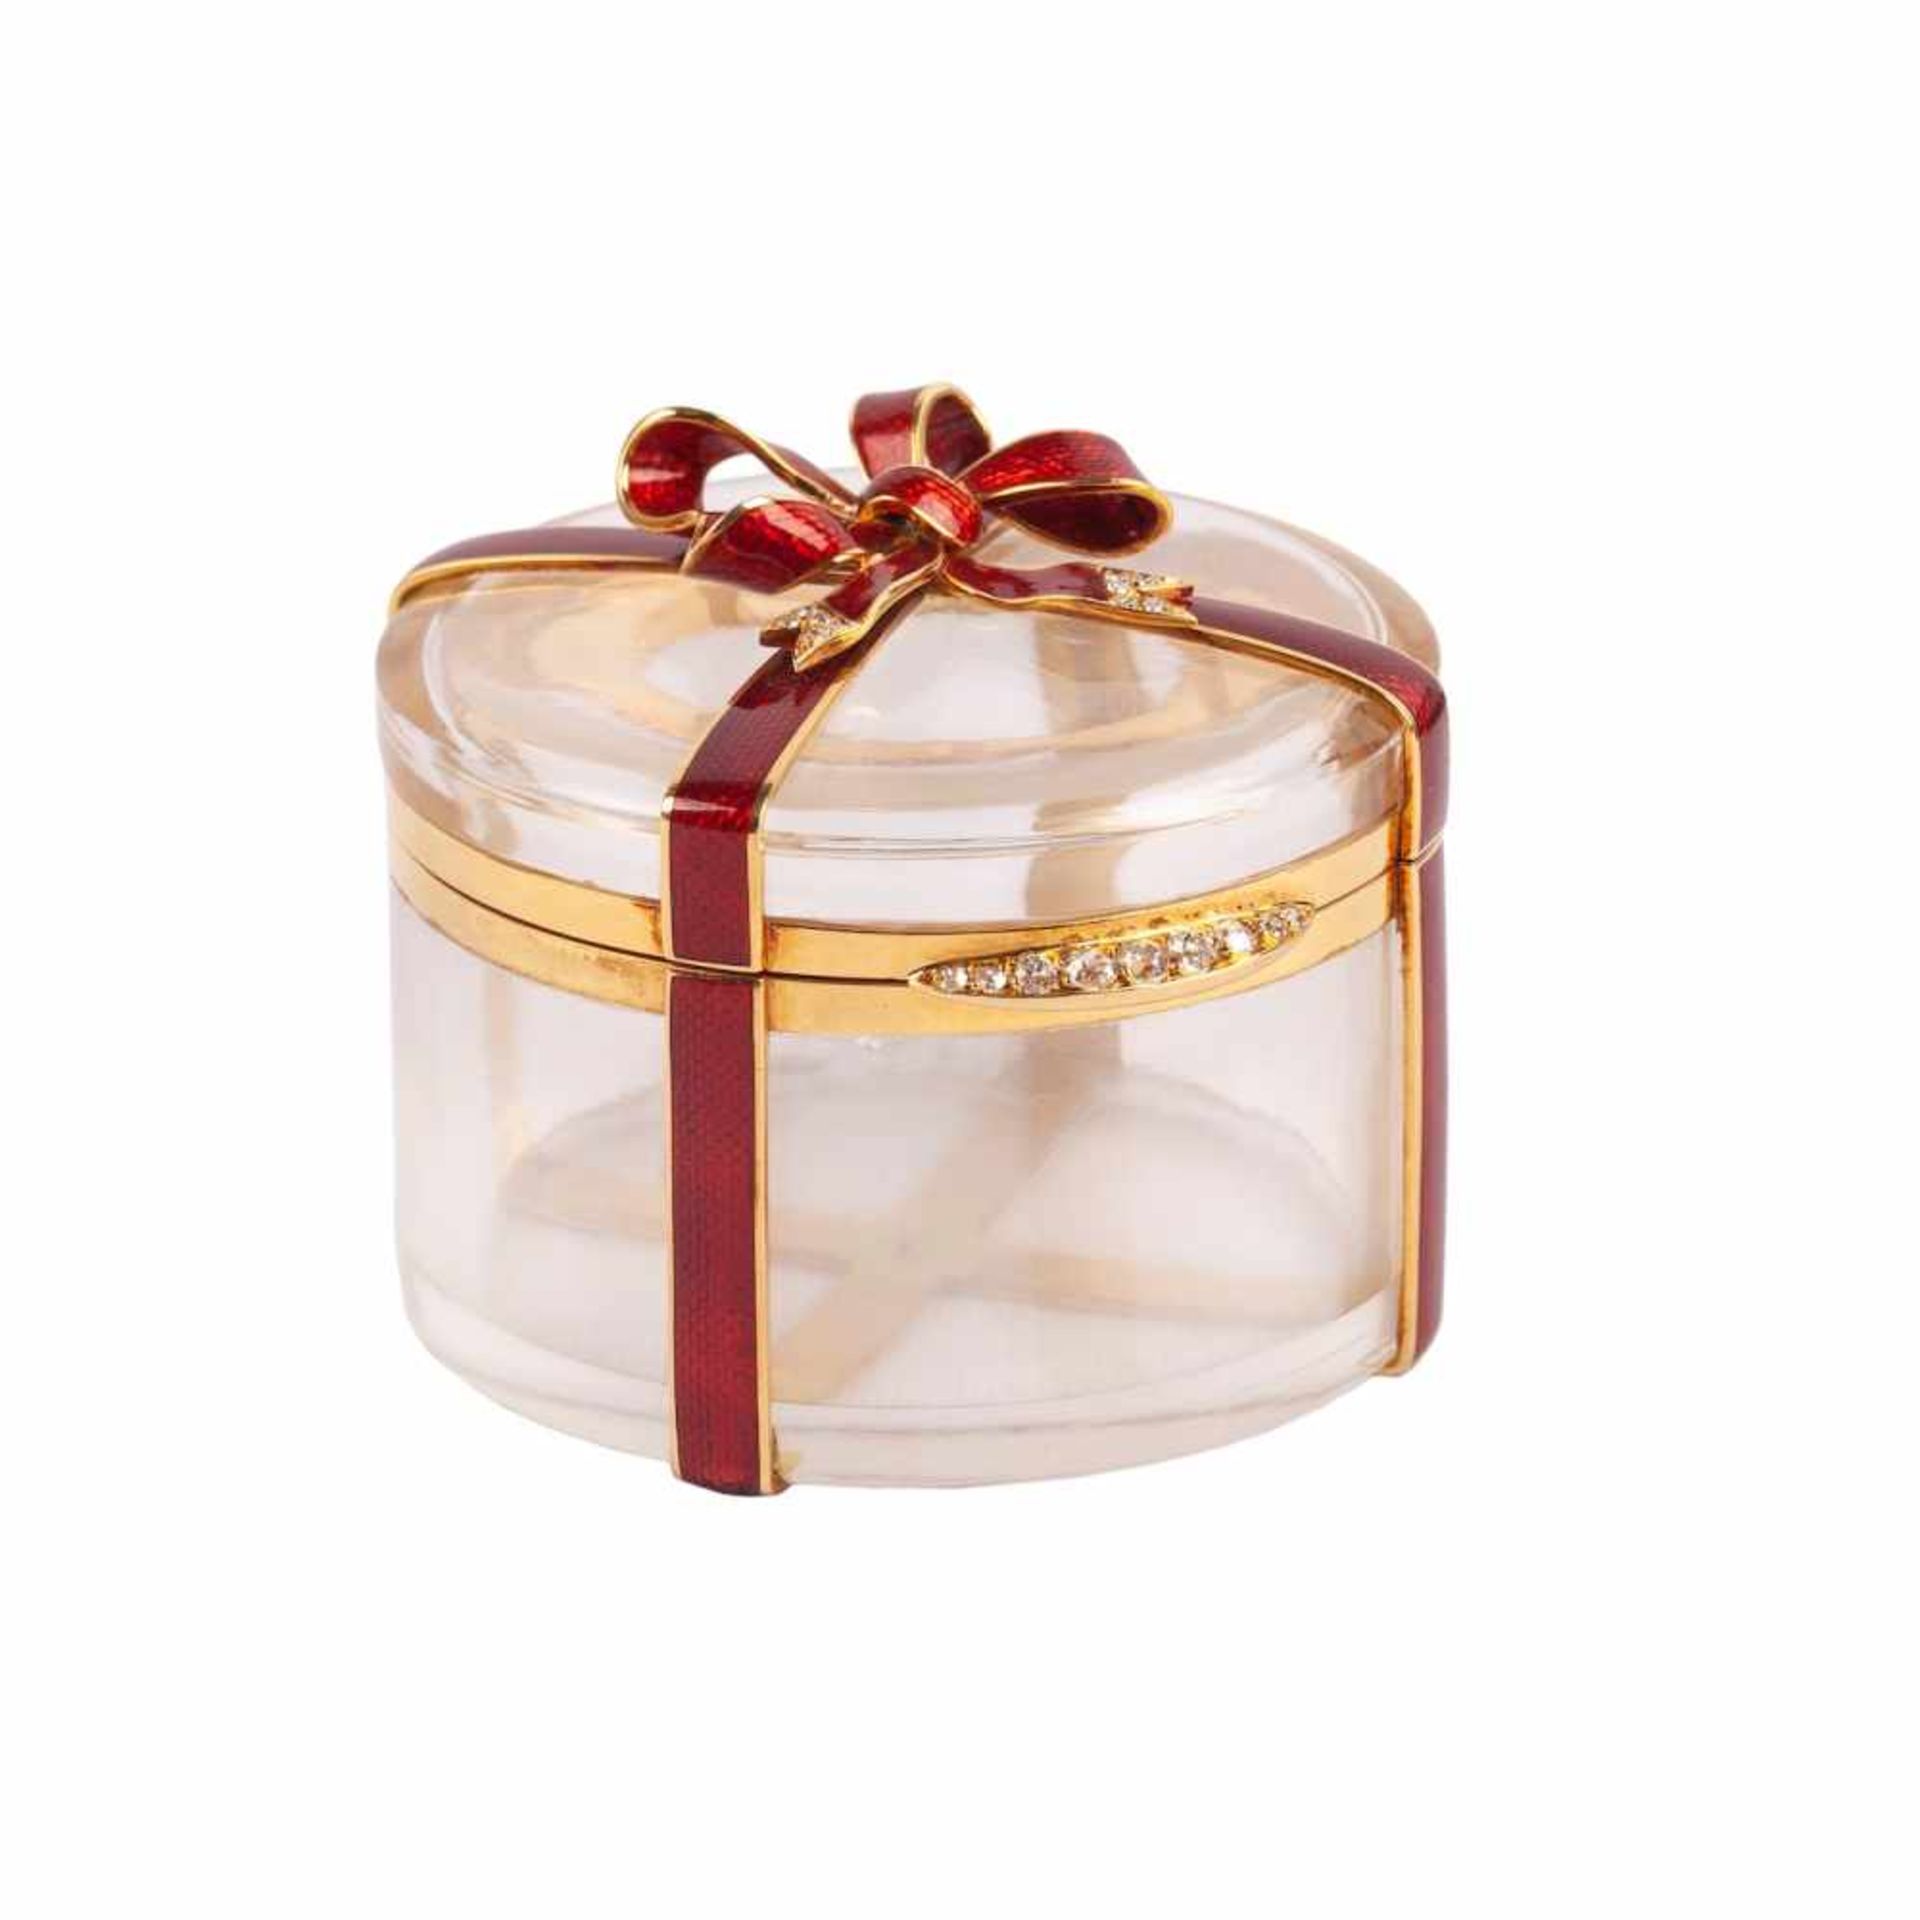 Faberge elegant gold & diamond bonbonniereAn elegant gold, guilloche enamel, diamond and crystal